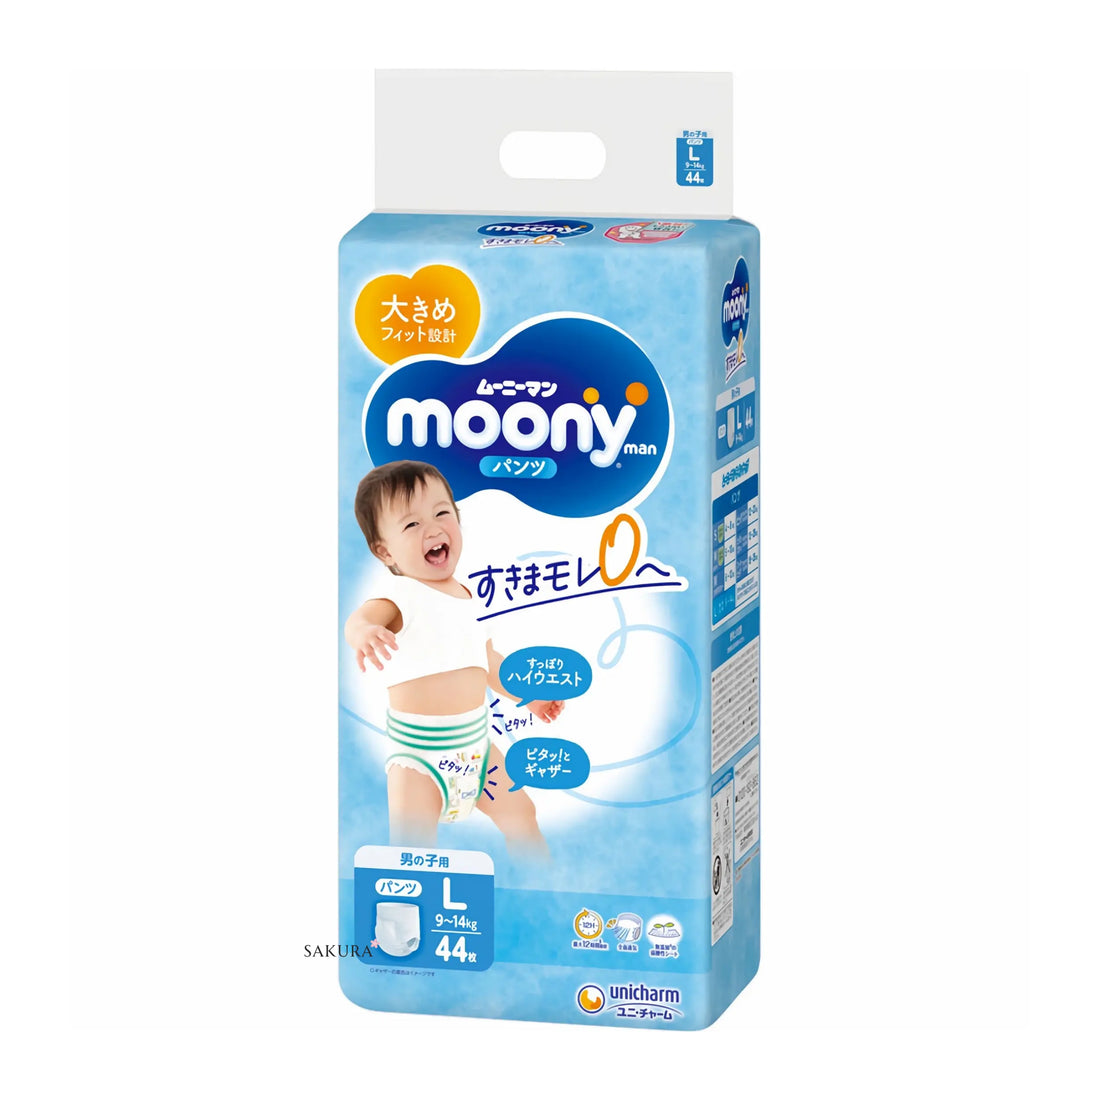 Moony 尤妮佳 男童拉拉裤 L (9-14kg) 44片